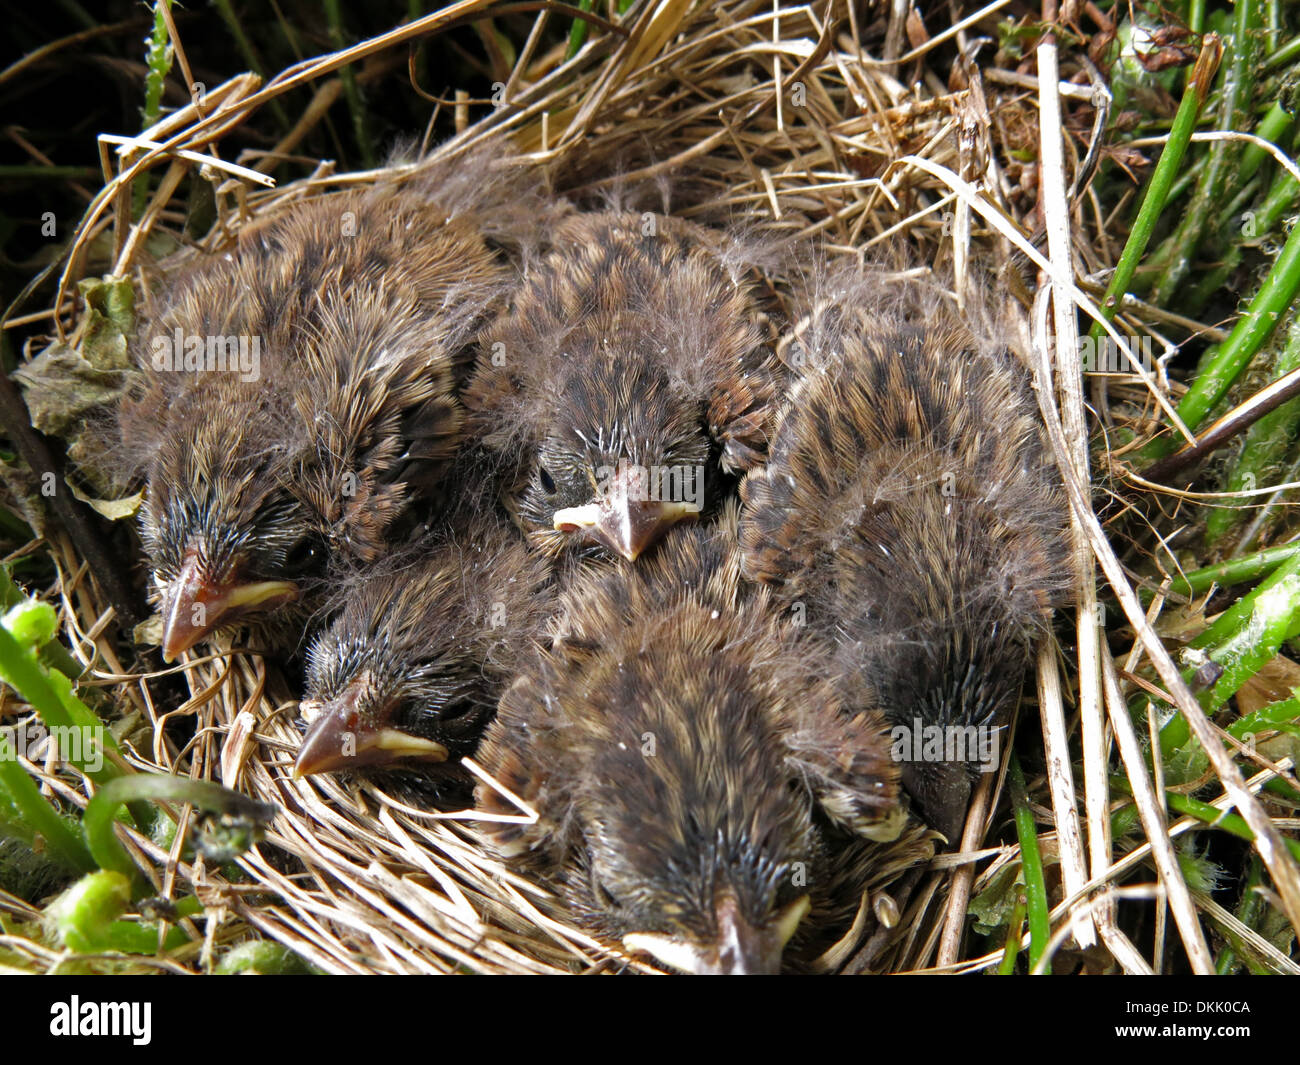 Pajaritos sparrow polluelos nido de huevos pollitos Foto de stock